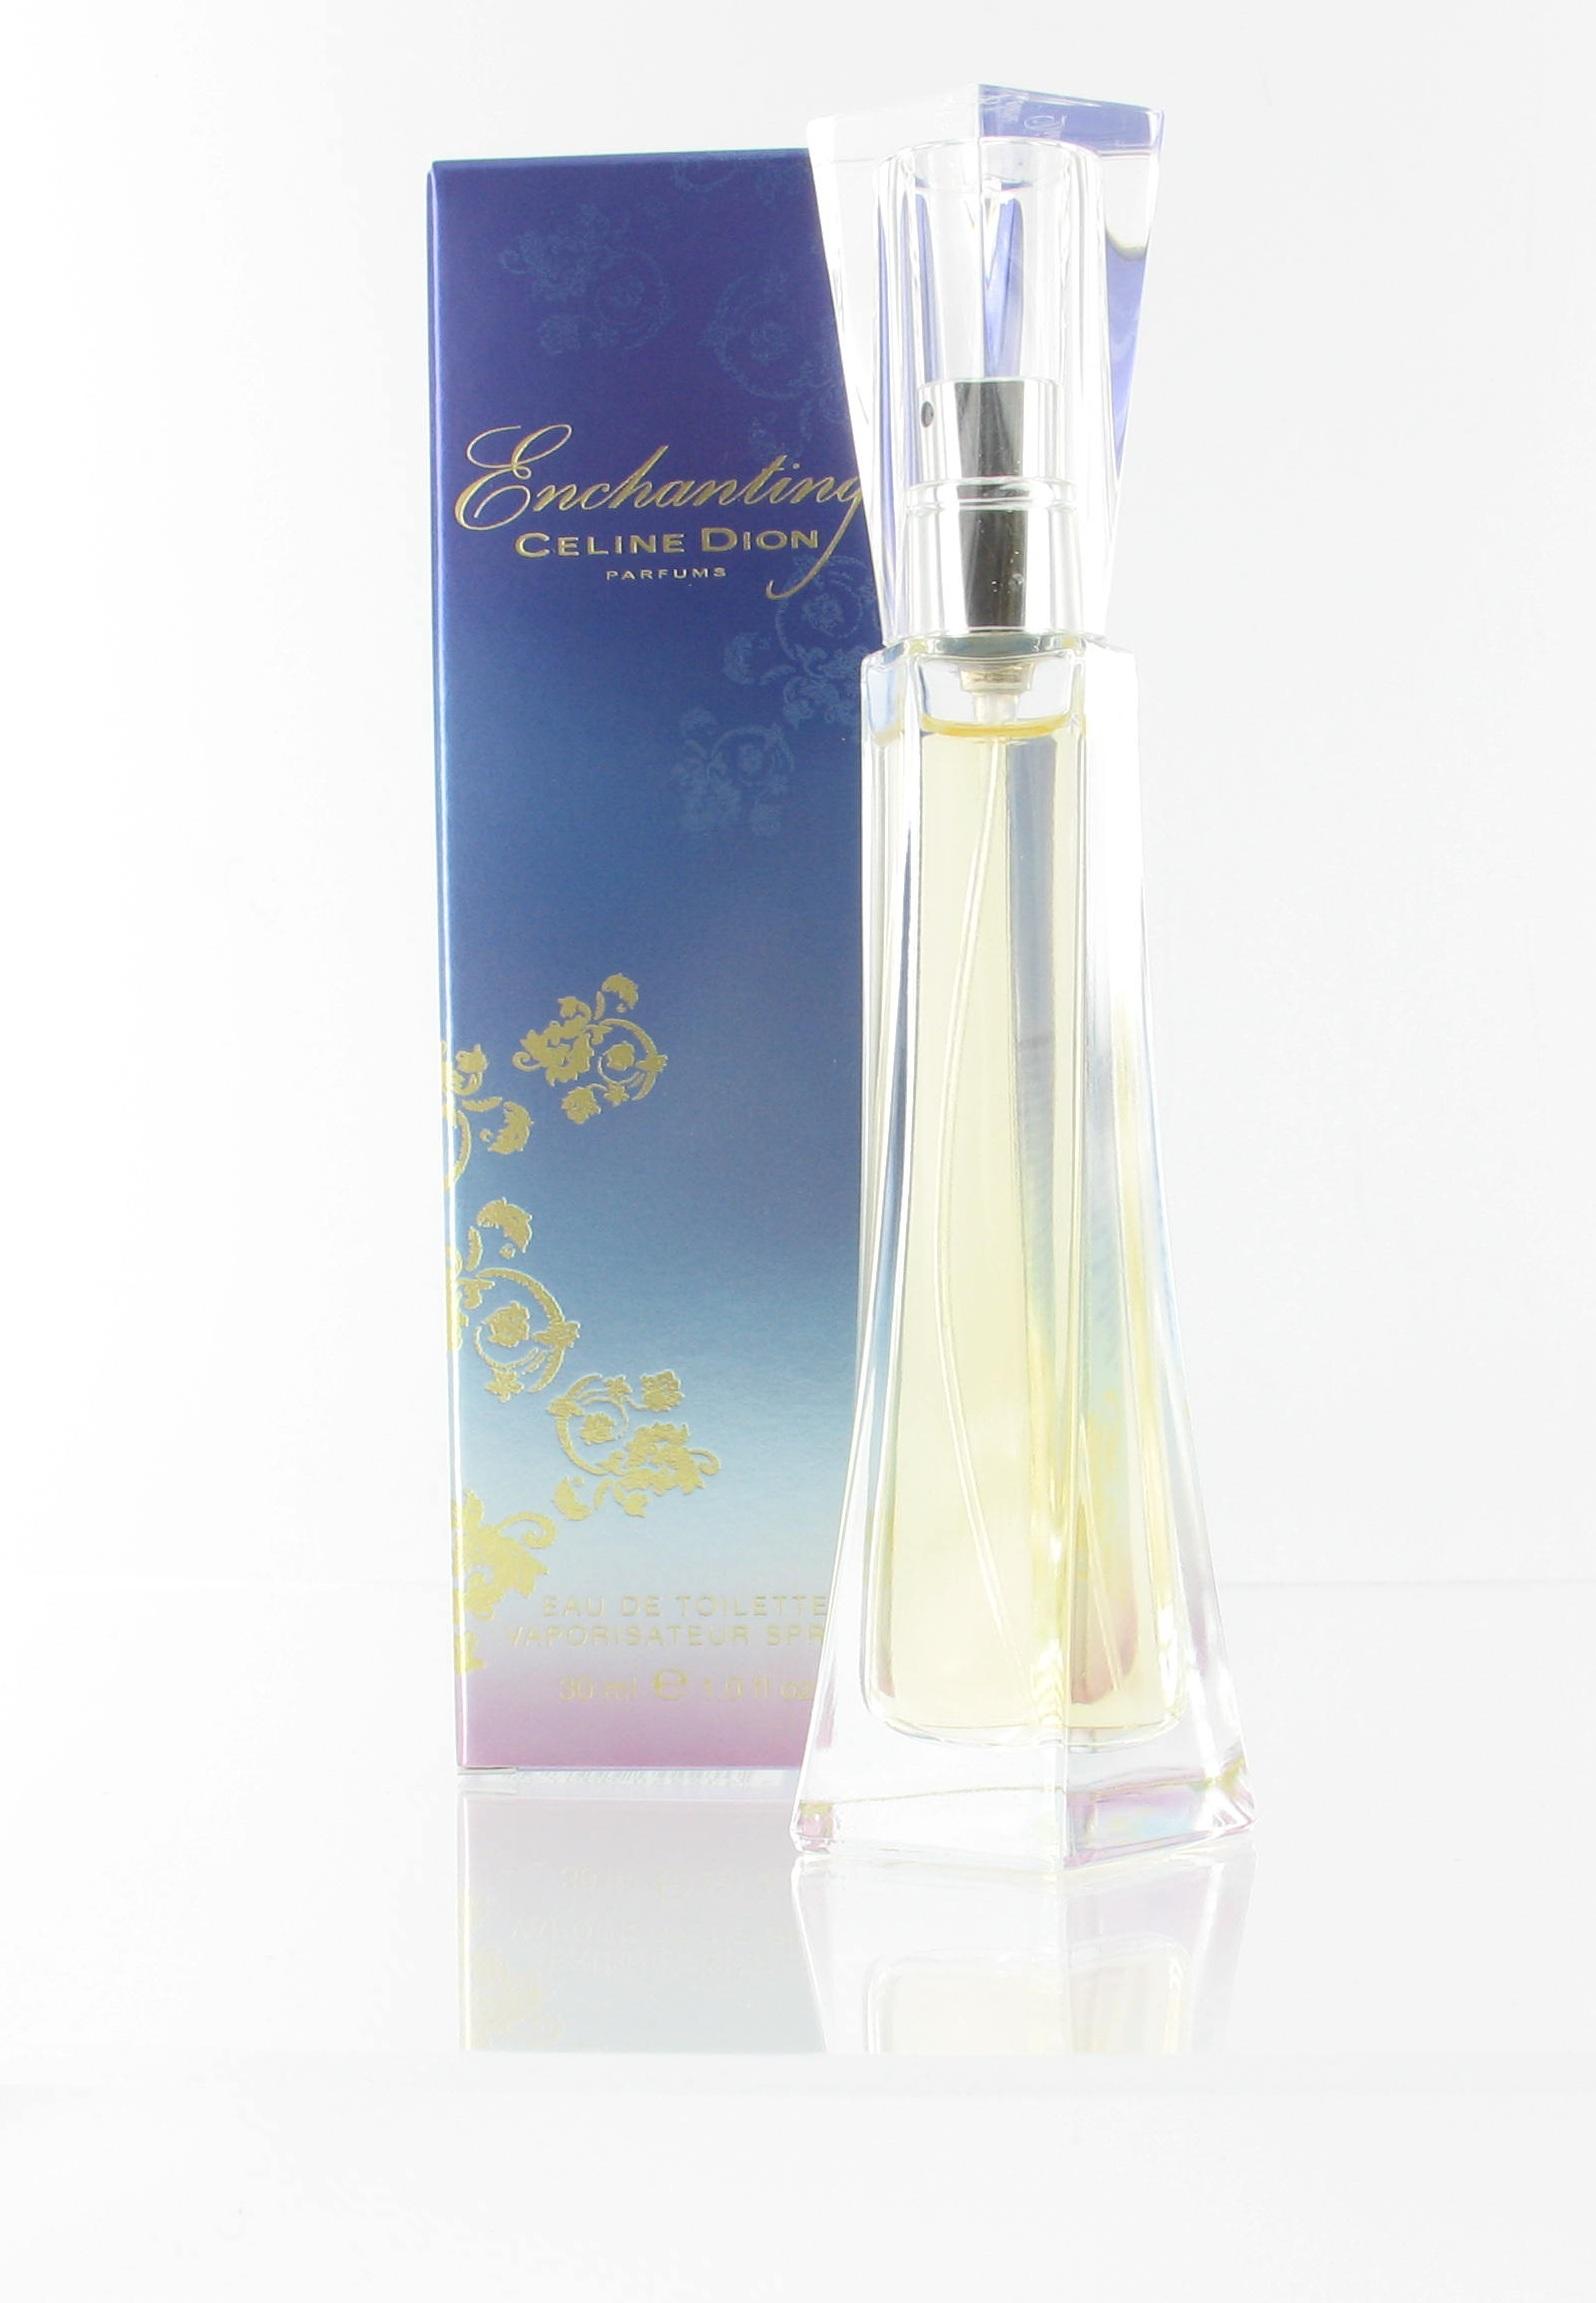 celine Dion Enchanting Perfume 30ml